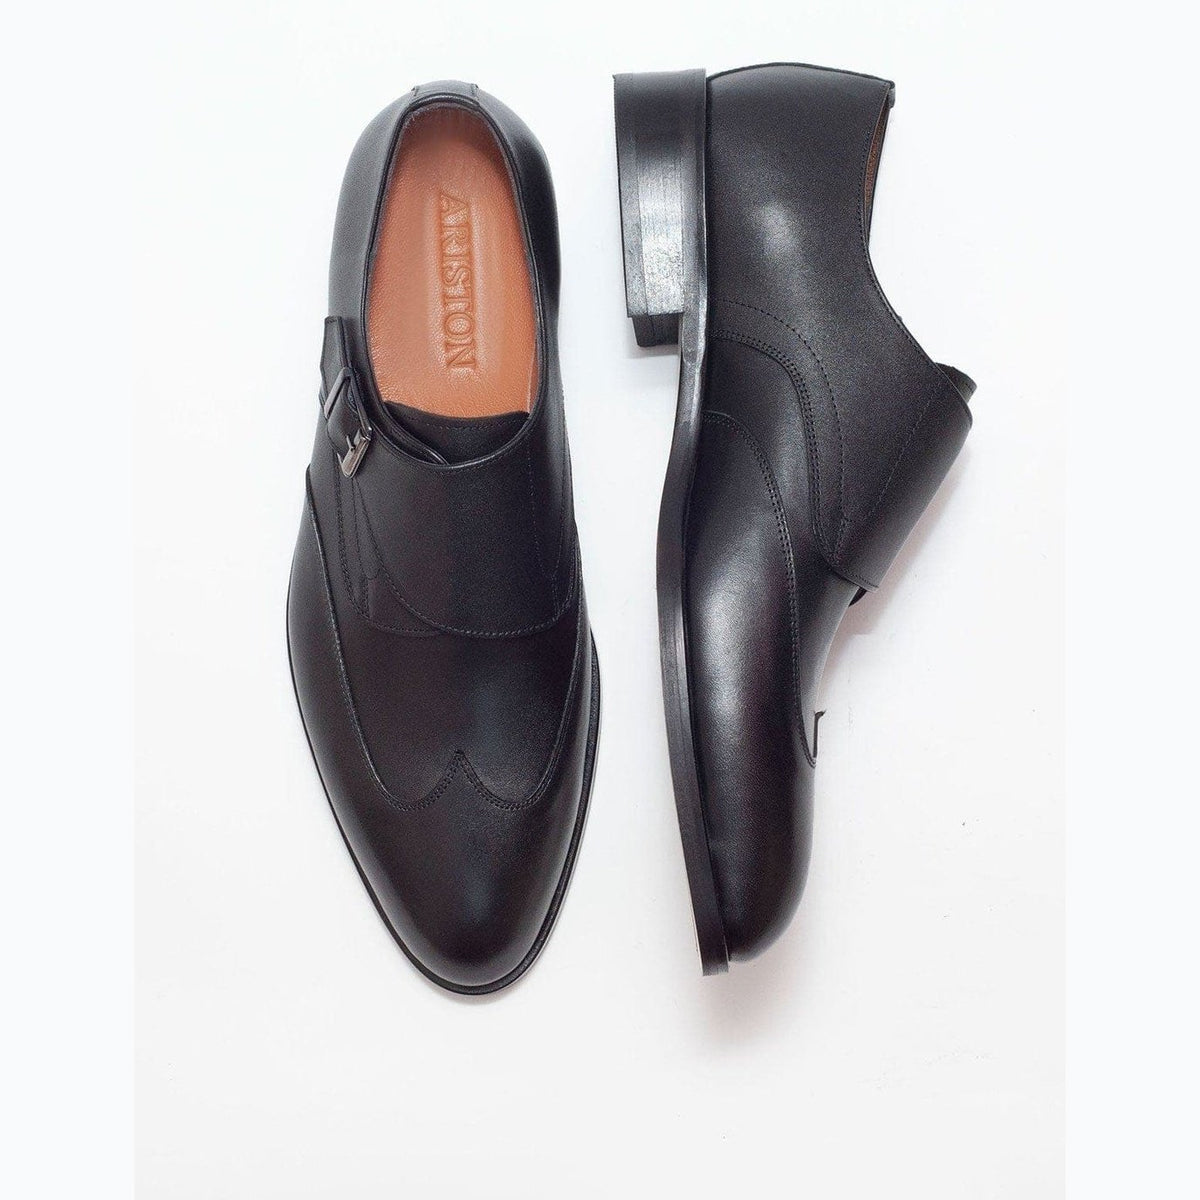 Ariston SHOES Ariston Mens Solid Black Single Monk Strap Leather Dress Shoes